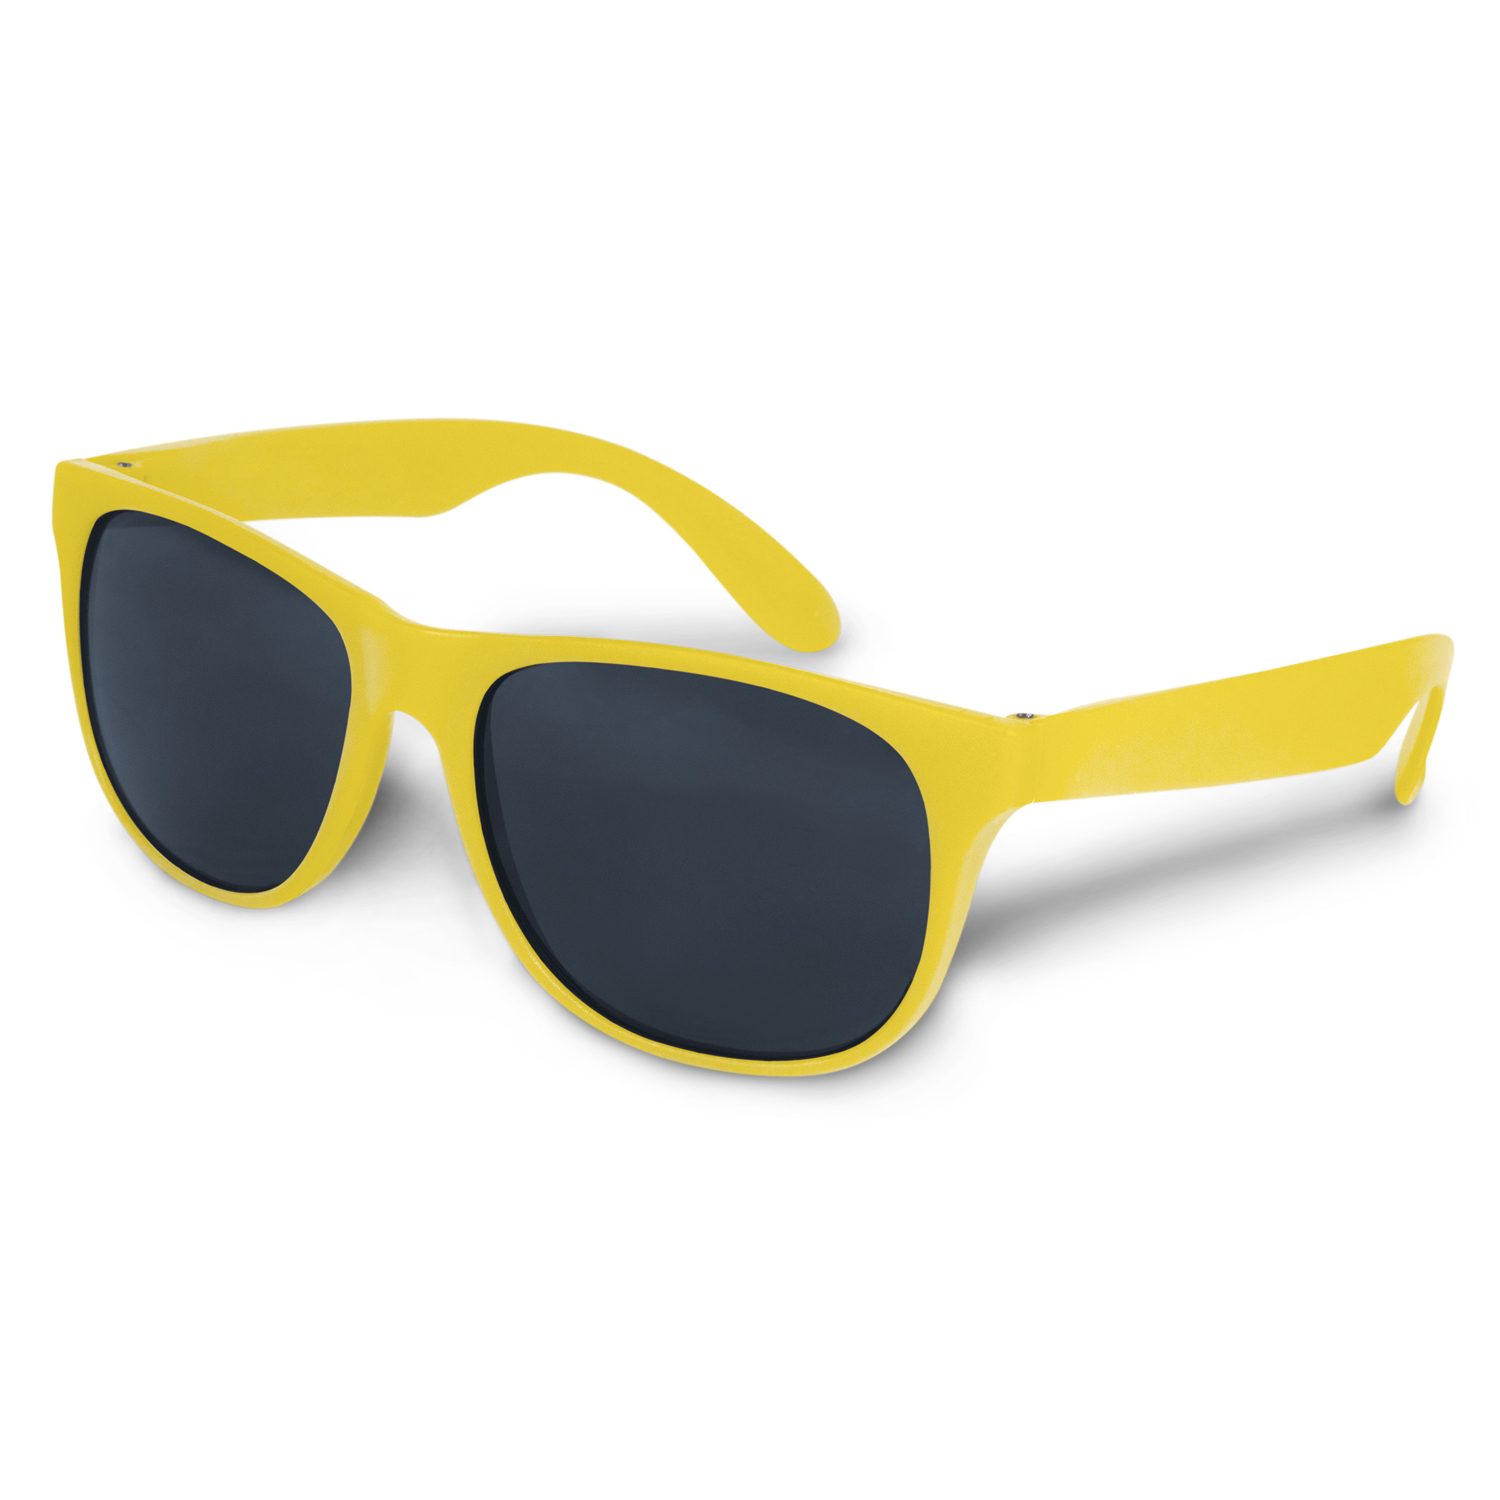 Sunglasses -  Malibu Basic in assorted colours - Yellow Malibu